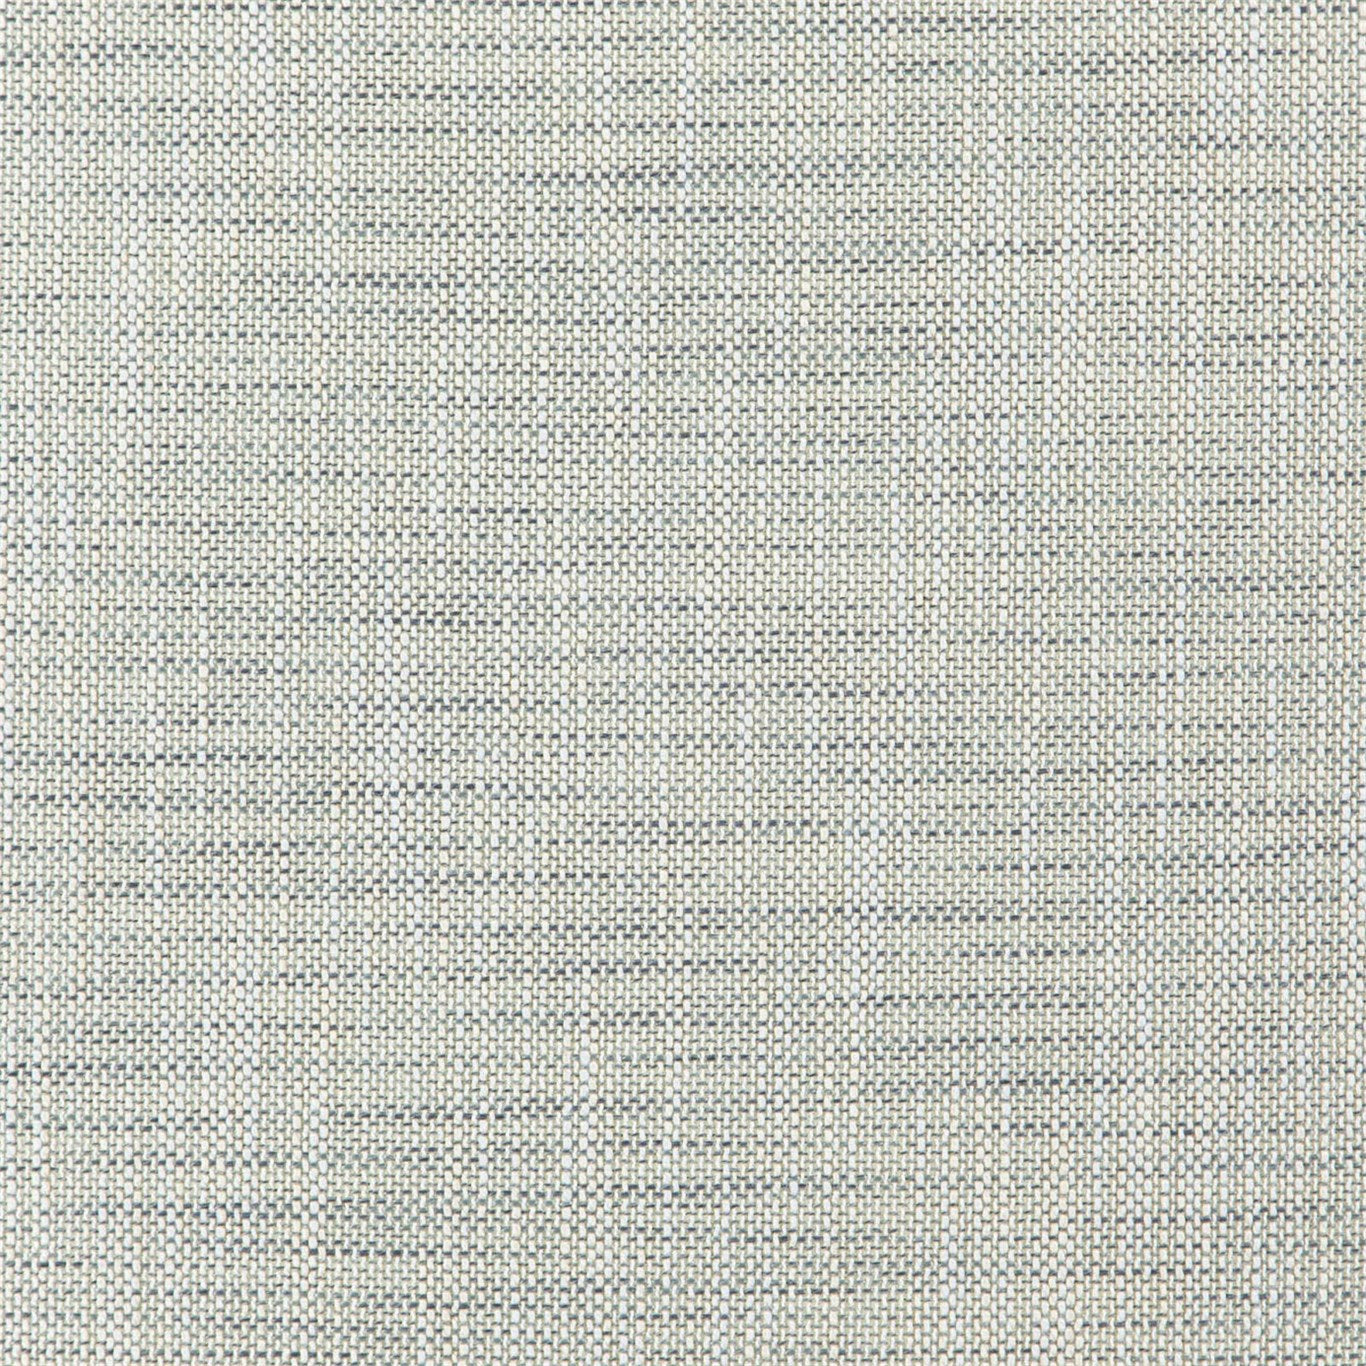 Sumac Fabric by Scion